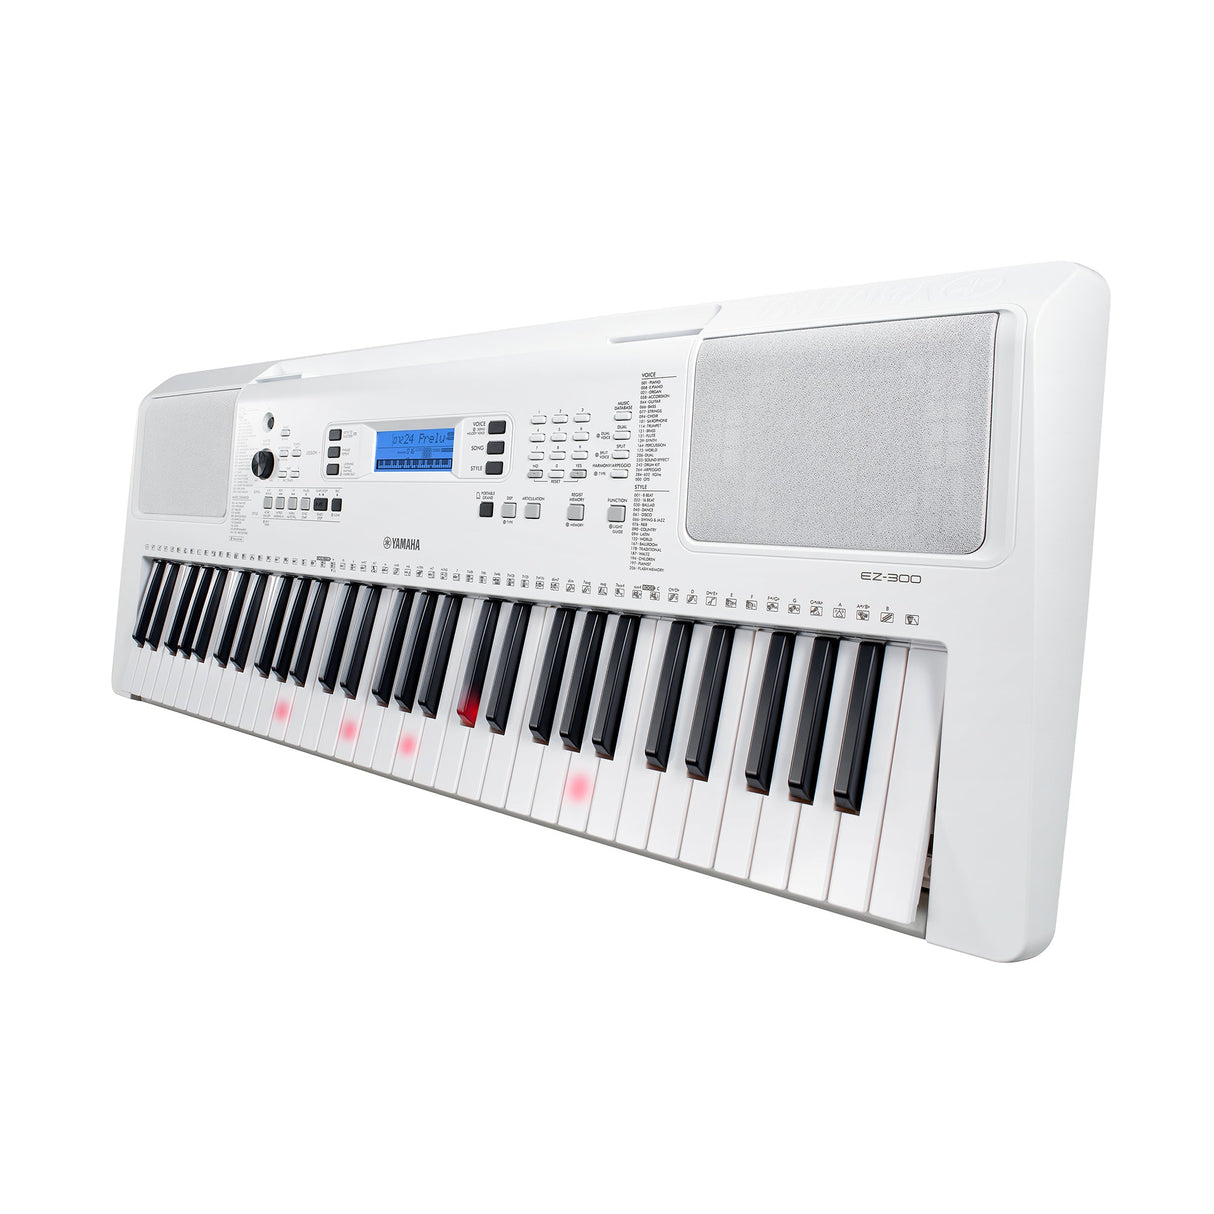 yamaha beginner keyboard ez300 white